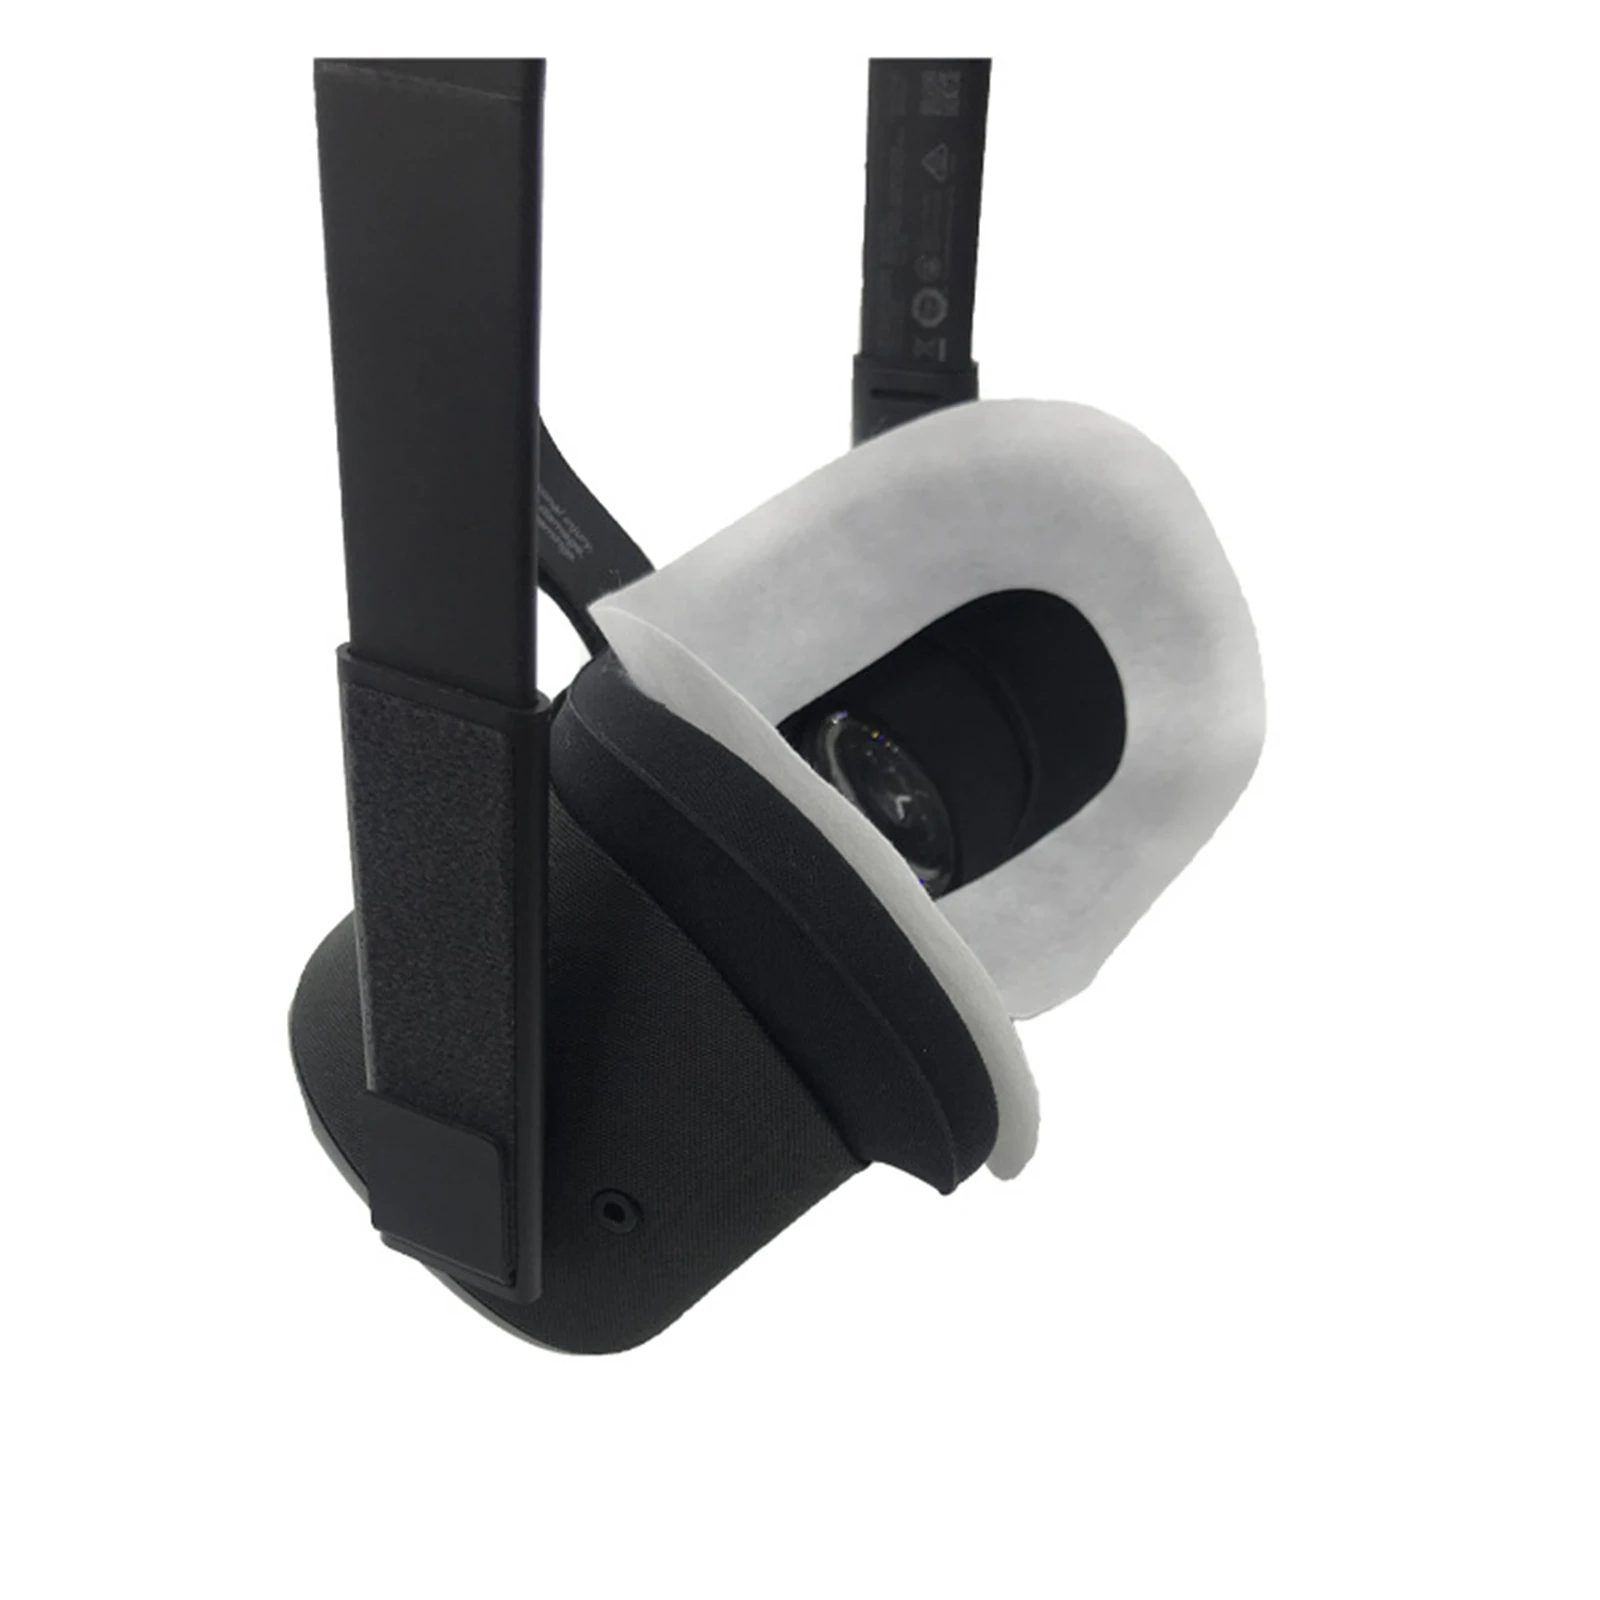 

1000 Pcs VR Disposable Eye Mask Cover for Oculus Quest oculus rift S/Oculus rift CV1 Virtual Reality Headset